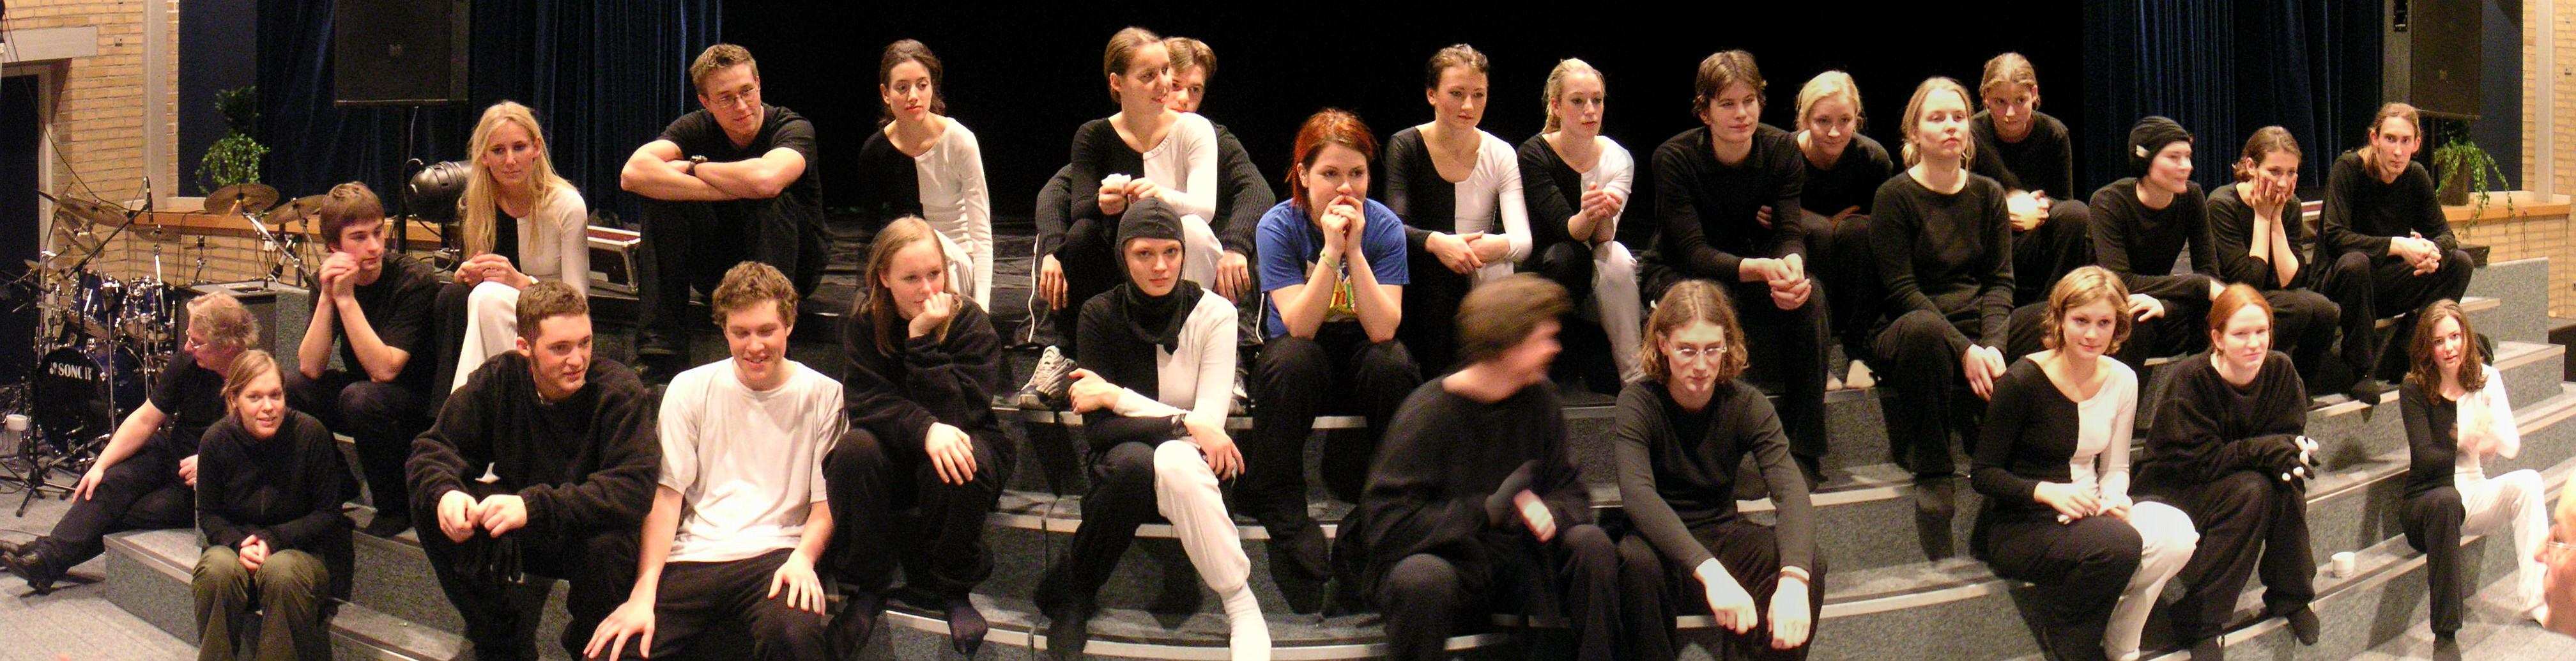 Theater-Träume-Ensemble